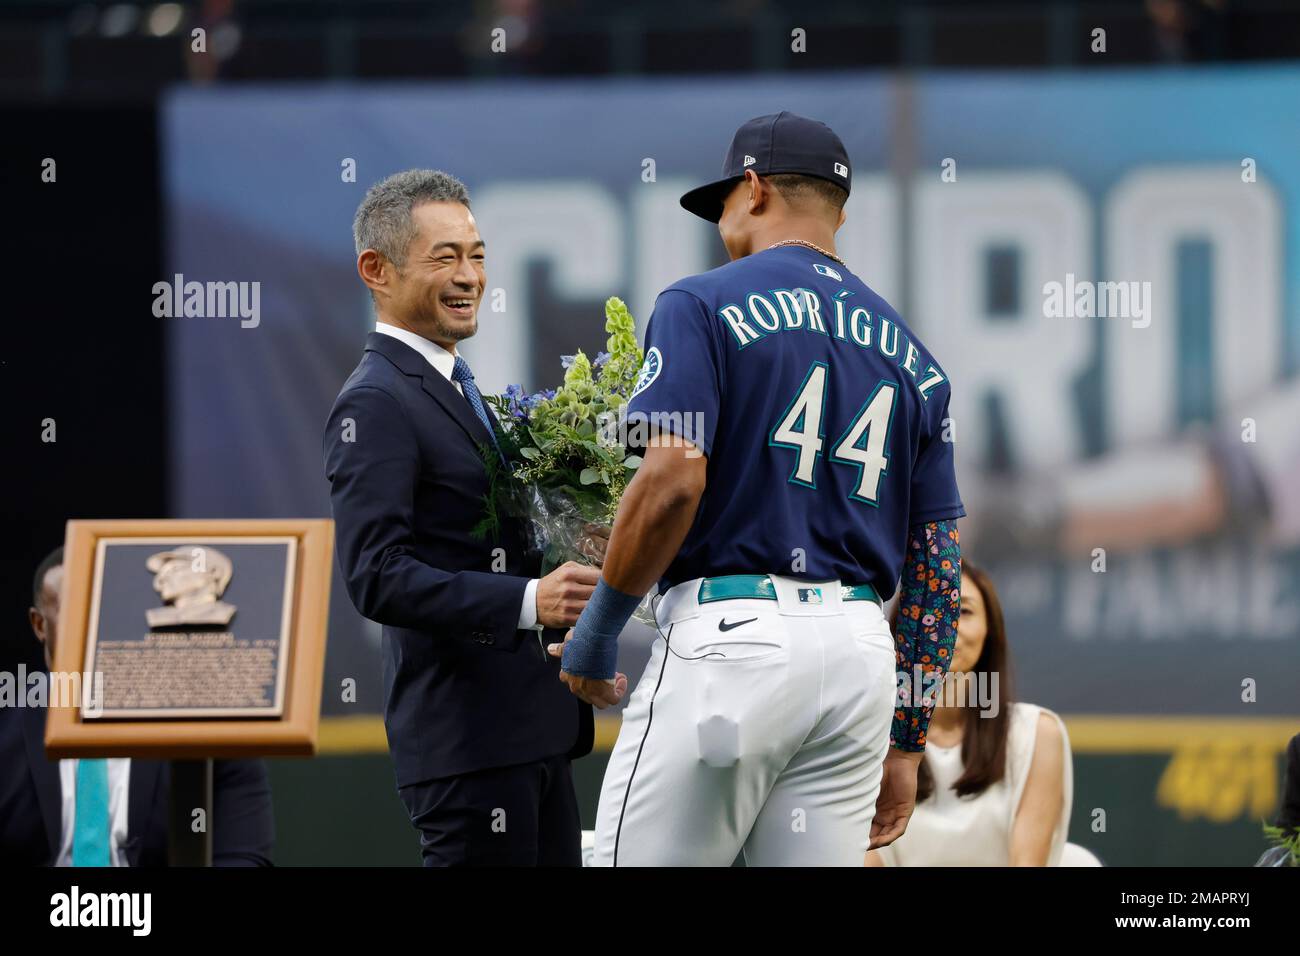 Baseball icon Ichiro Suzuki inducted into Mariners Hall of Fame - The Japan  Times